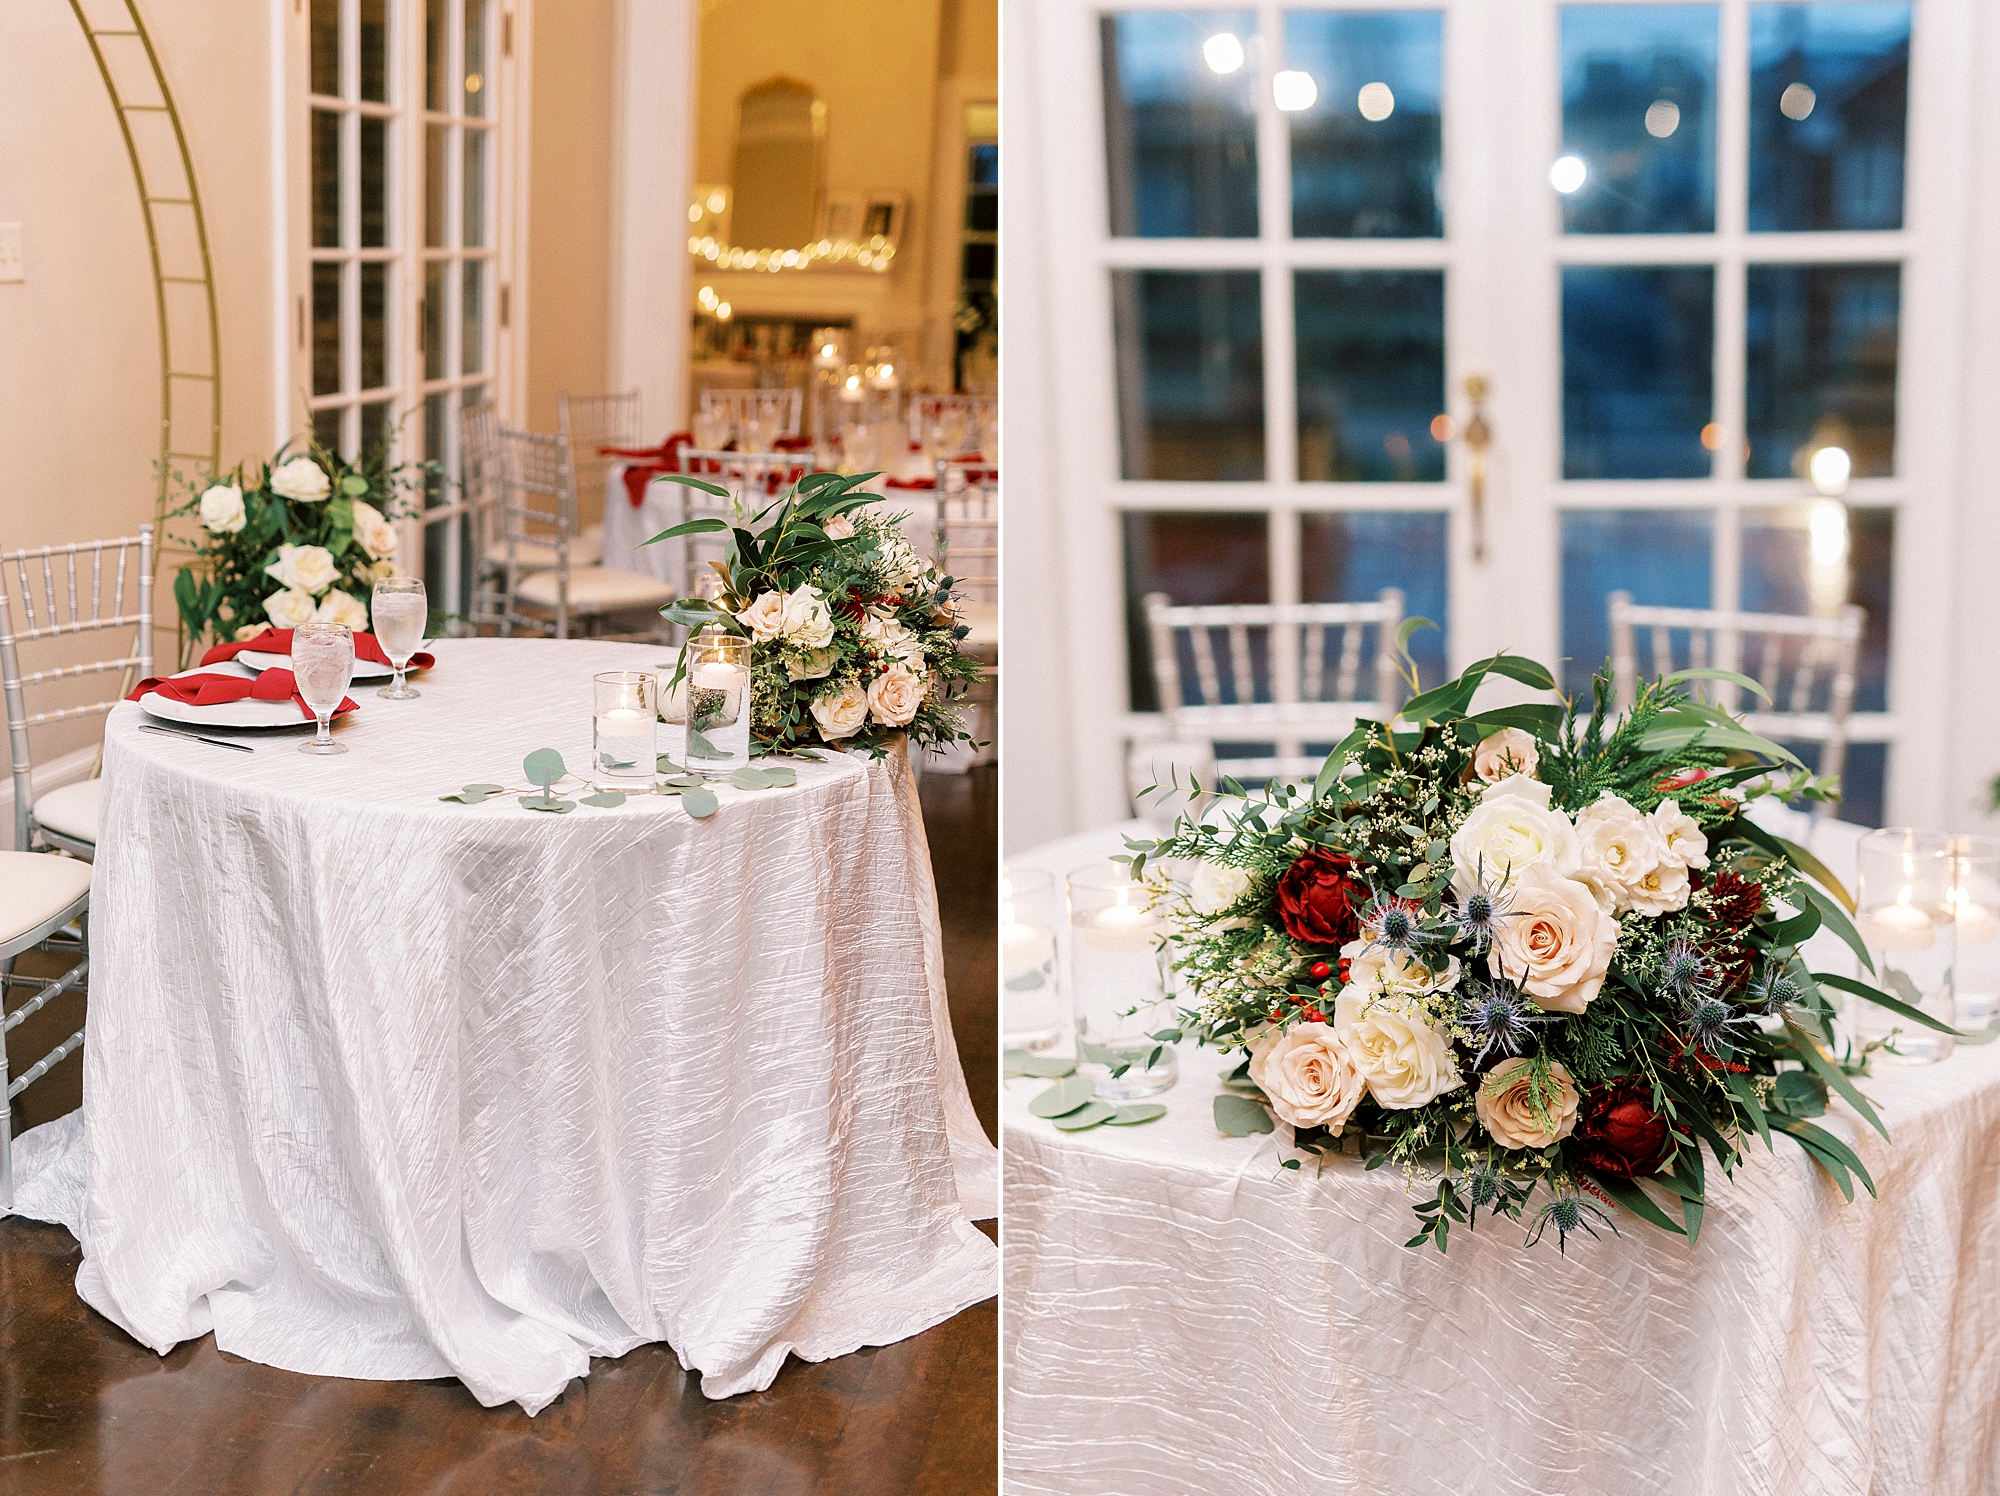 white and red flower arrangements rest on table for wedding reception inside Separk Mansion